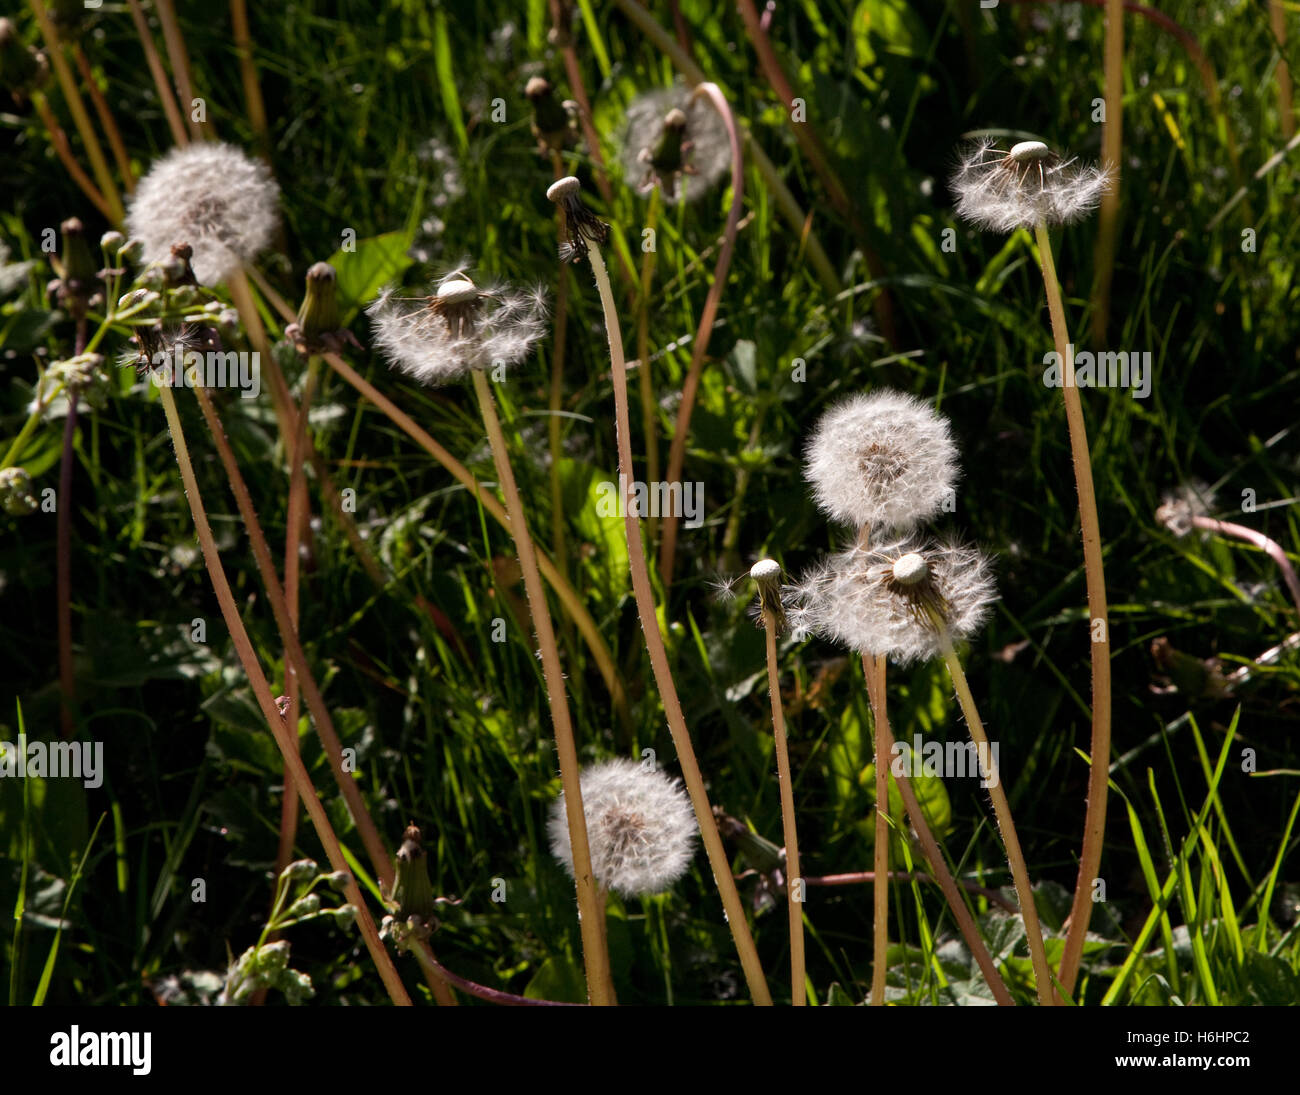 Dandelion seeds dispersing Stock Photo